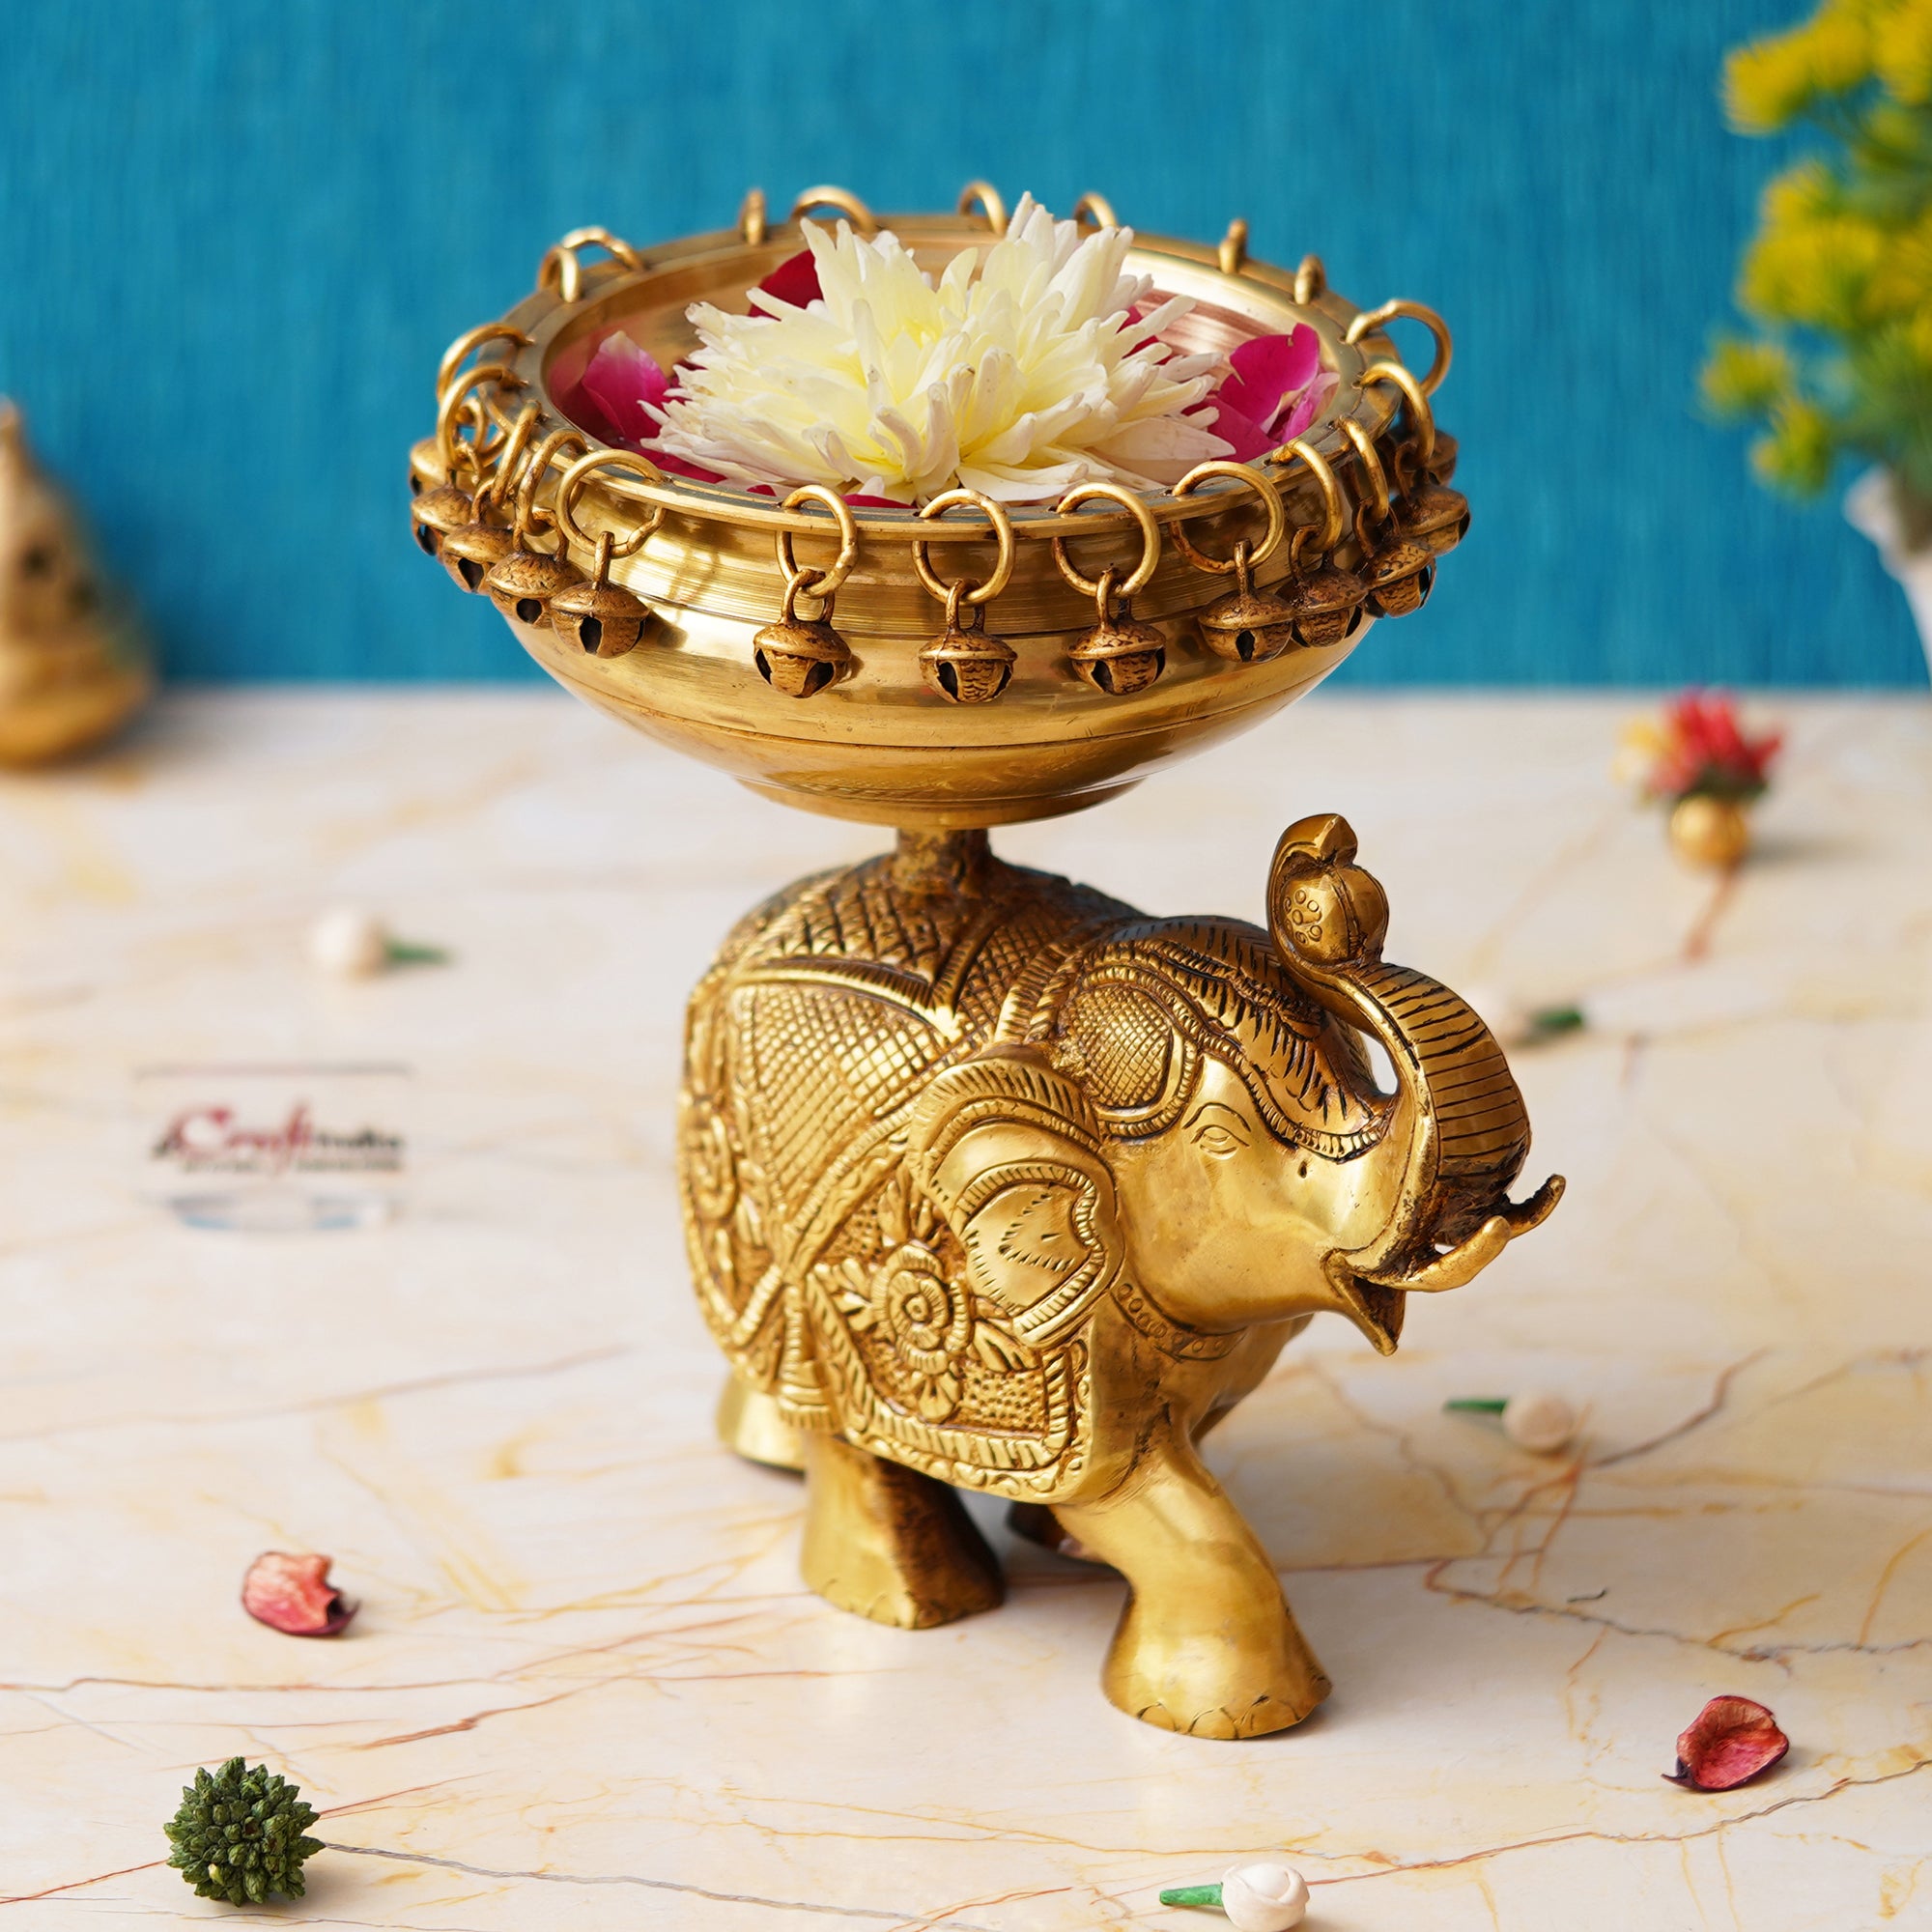 Golden Brass Urli on Elephant Statue with Bells for Floating Flowers - Ethnic Design Decorative Showpiece for Home & Office Decor, Diwali Decoration - Gift for Housewarming, Navratri Festival 5